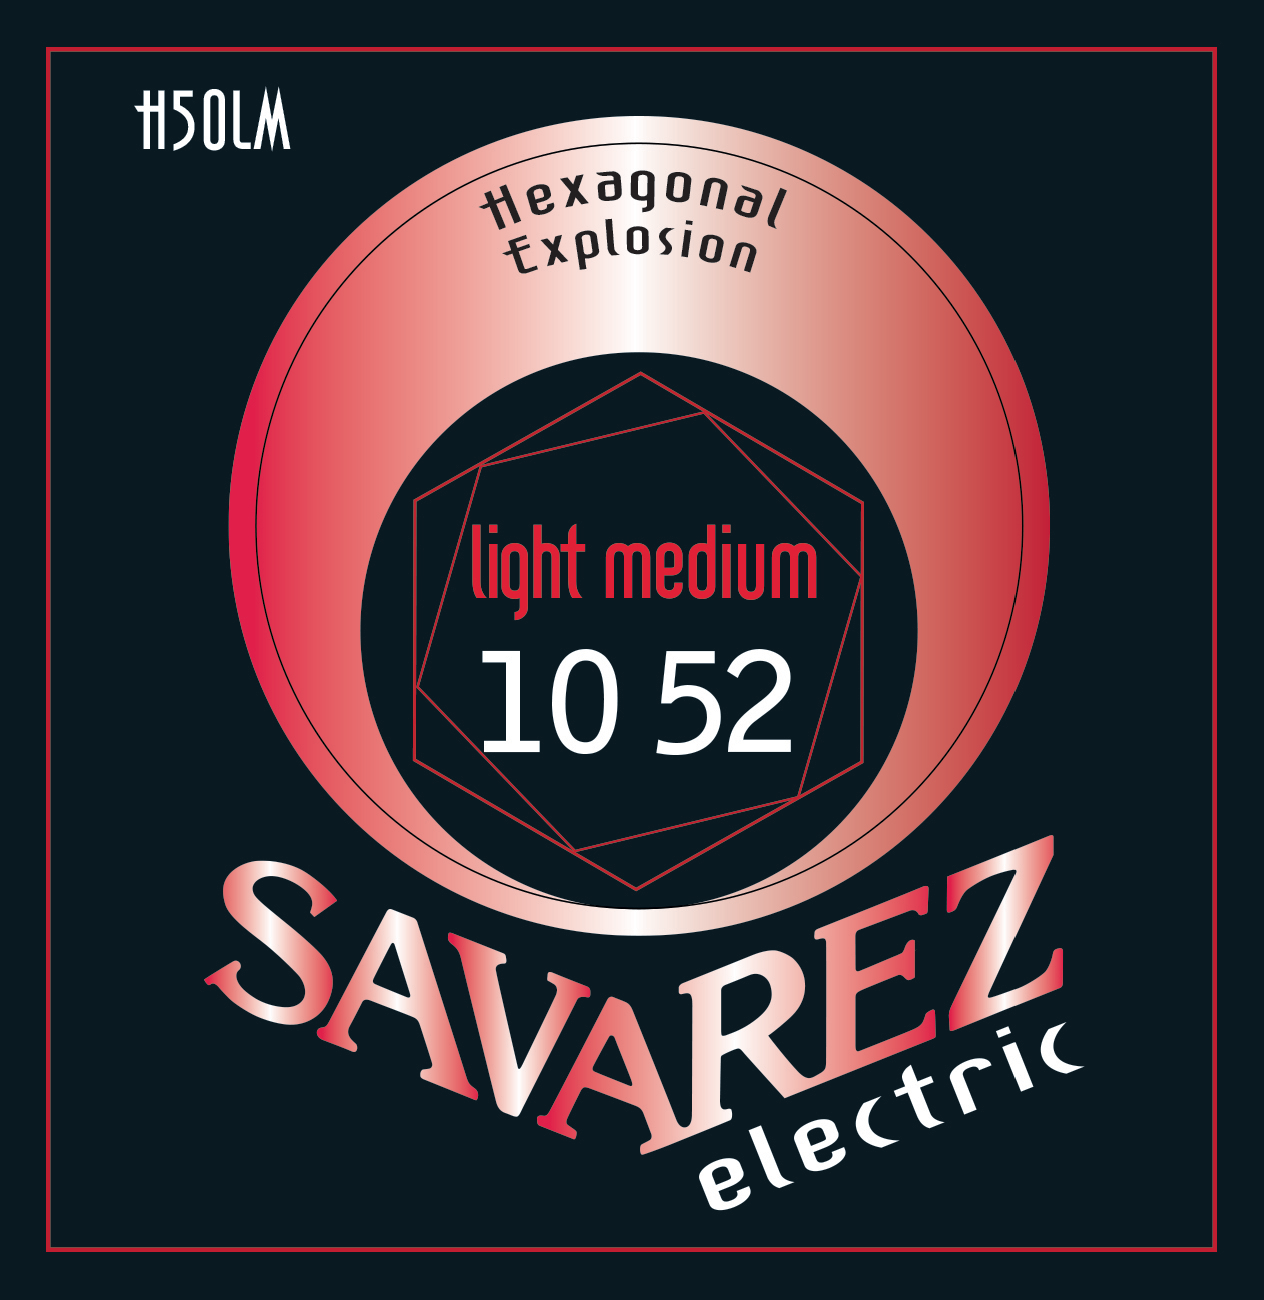 SAVAREZ ELECTRIC HEXAGONAL EXPLOSION H50LM